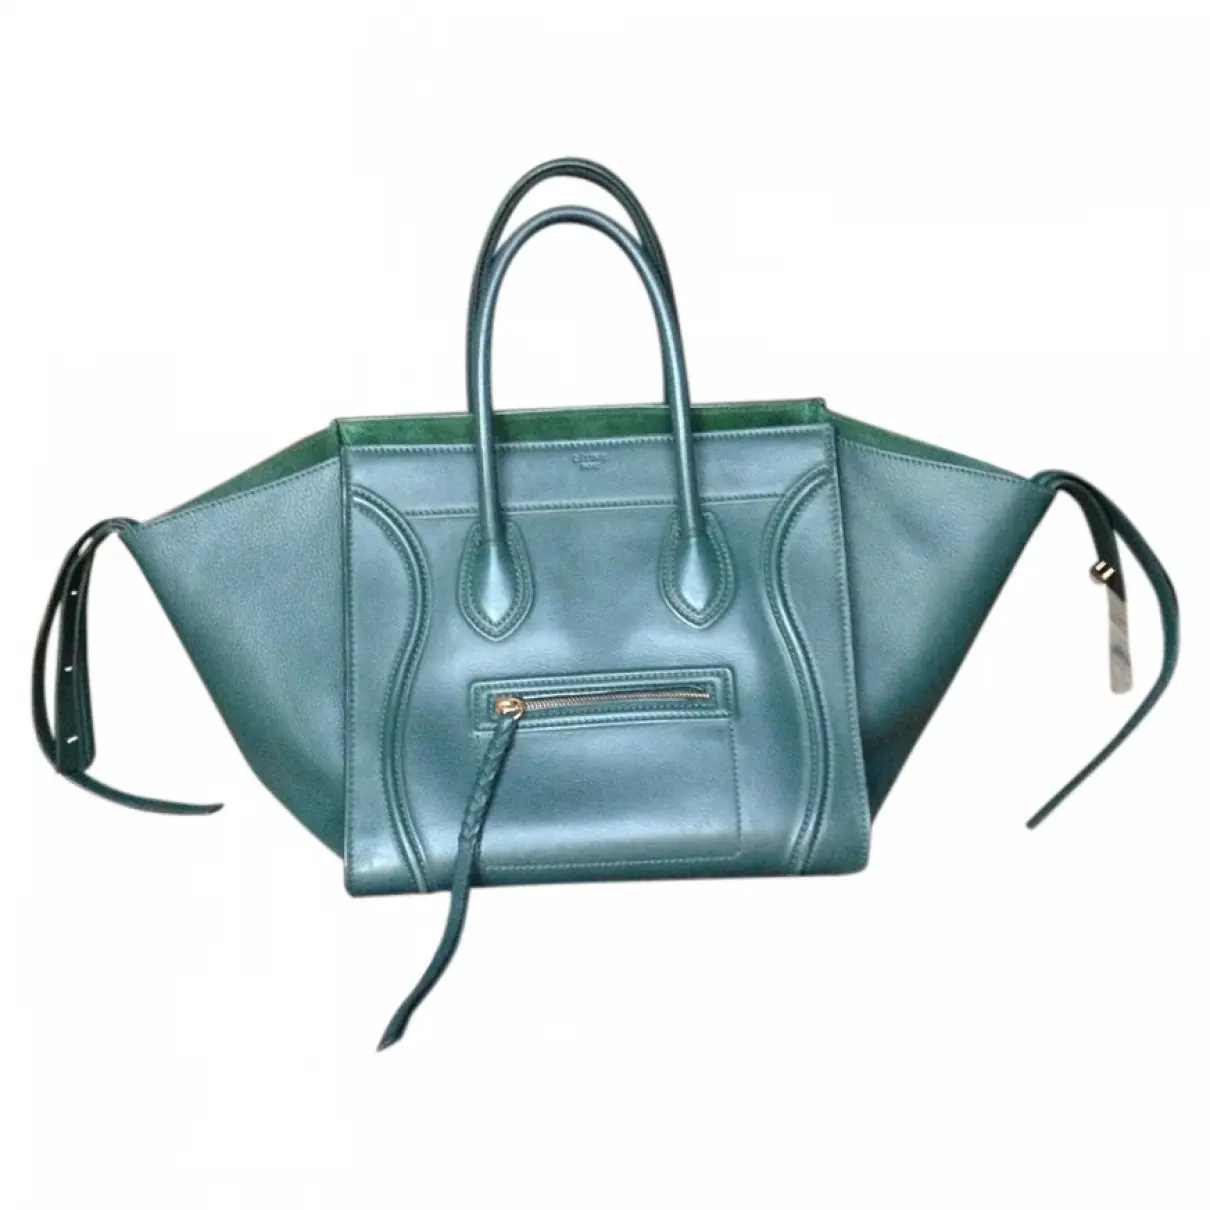 Green Leather Handbag Luggage Phantom Celine